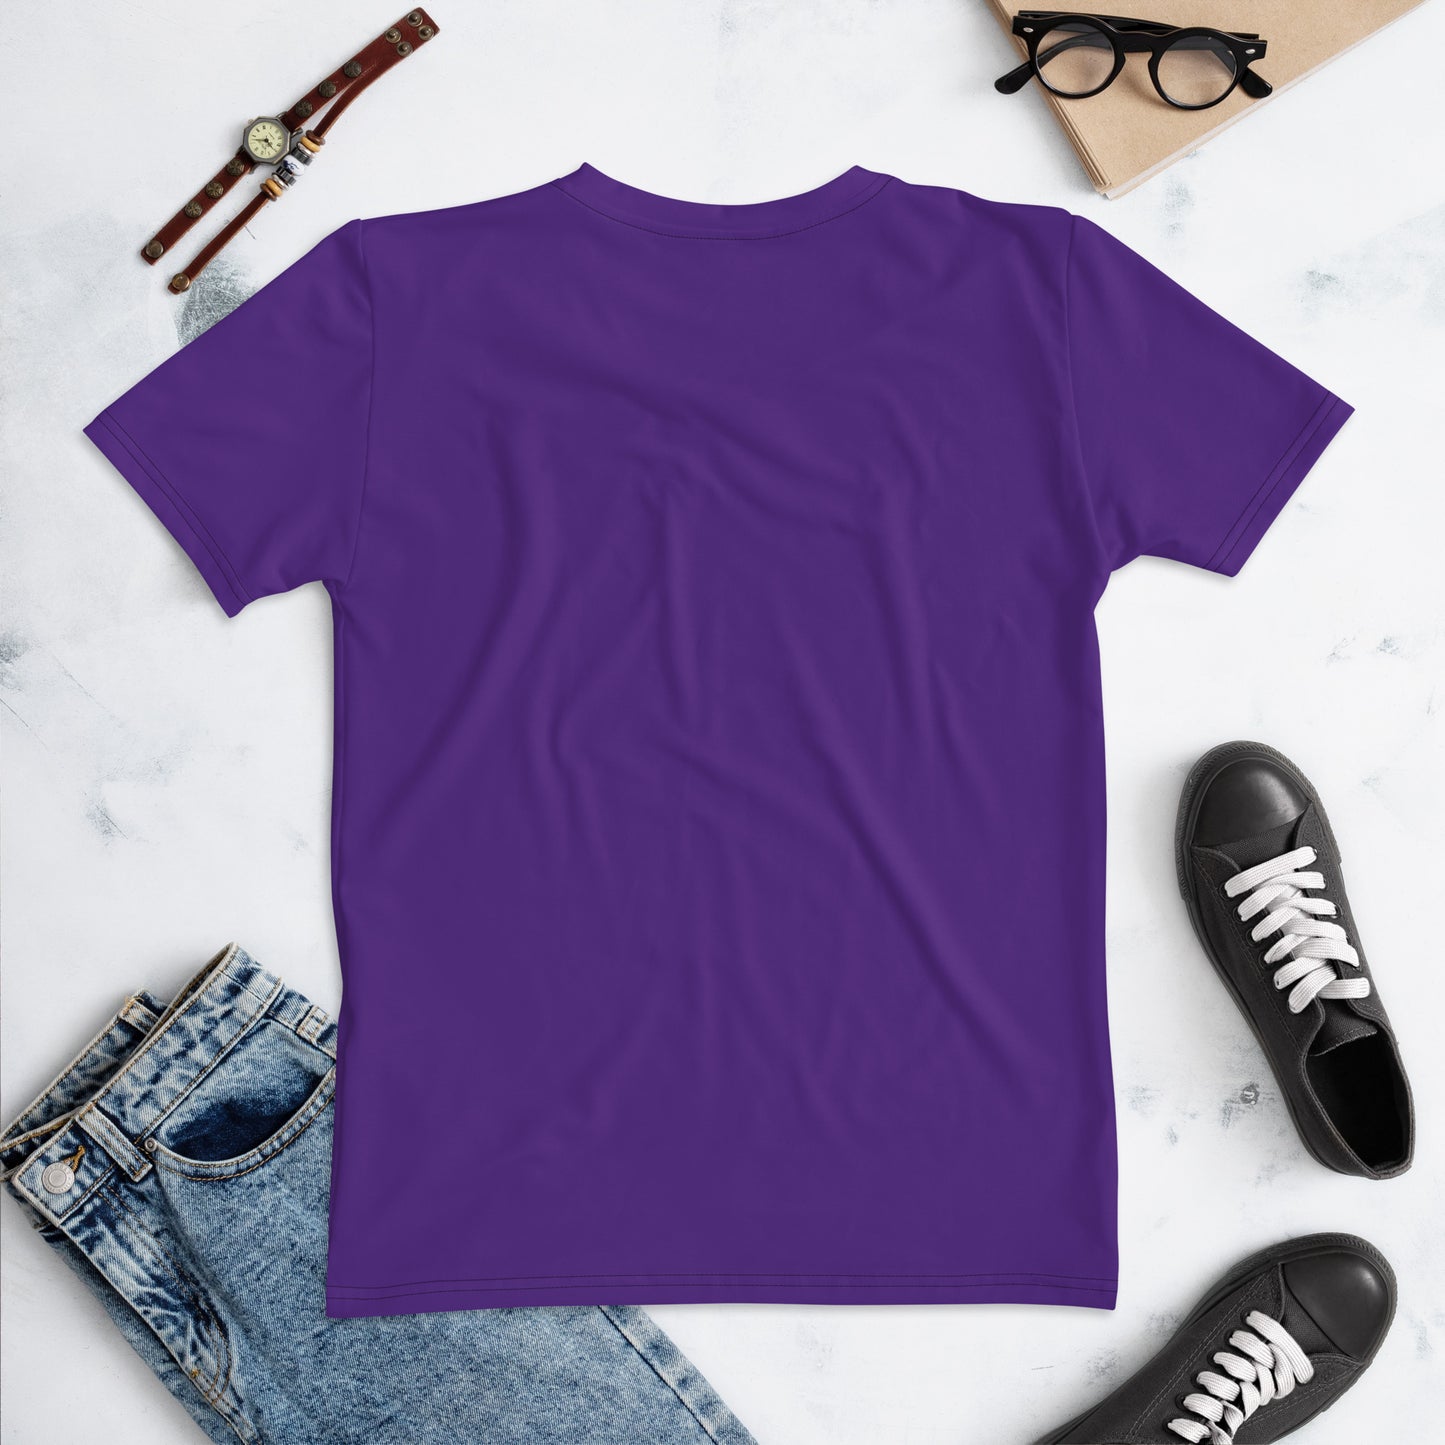 Anime girl purple Women's T-shirt